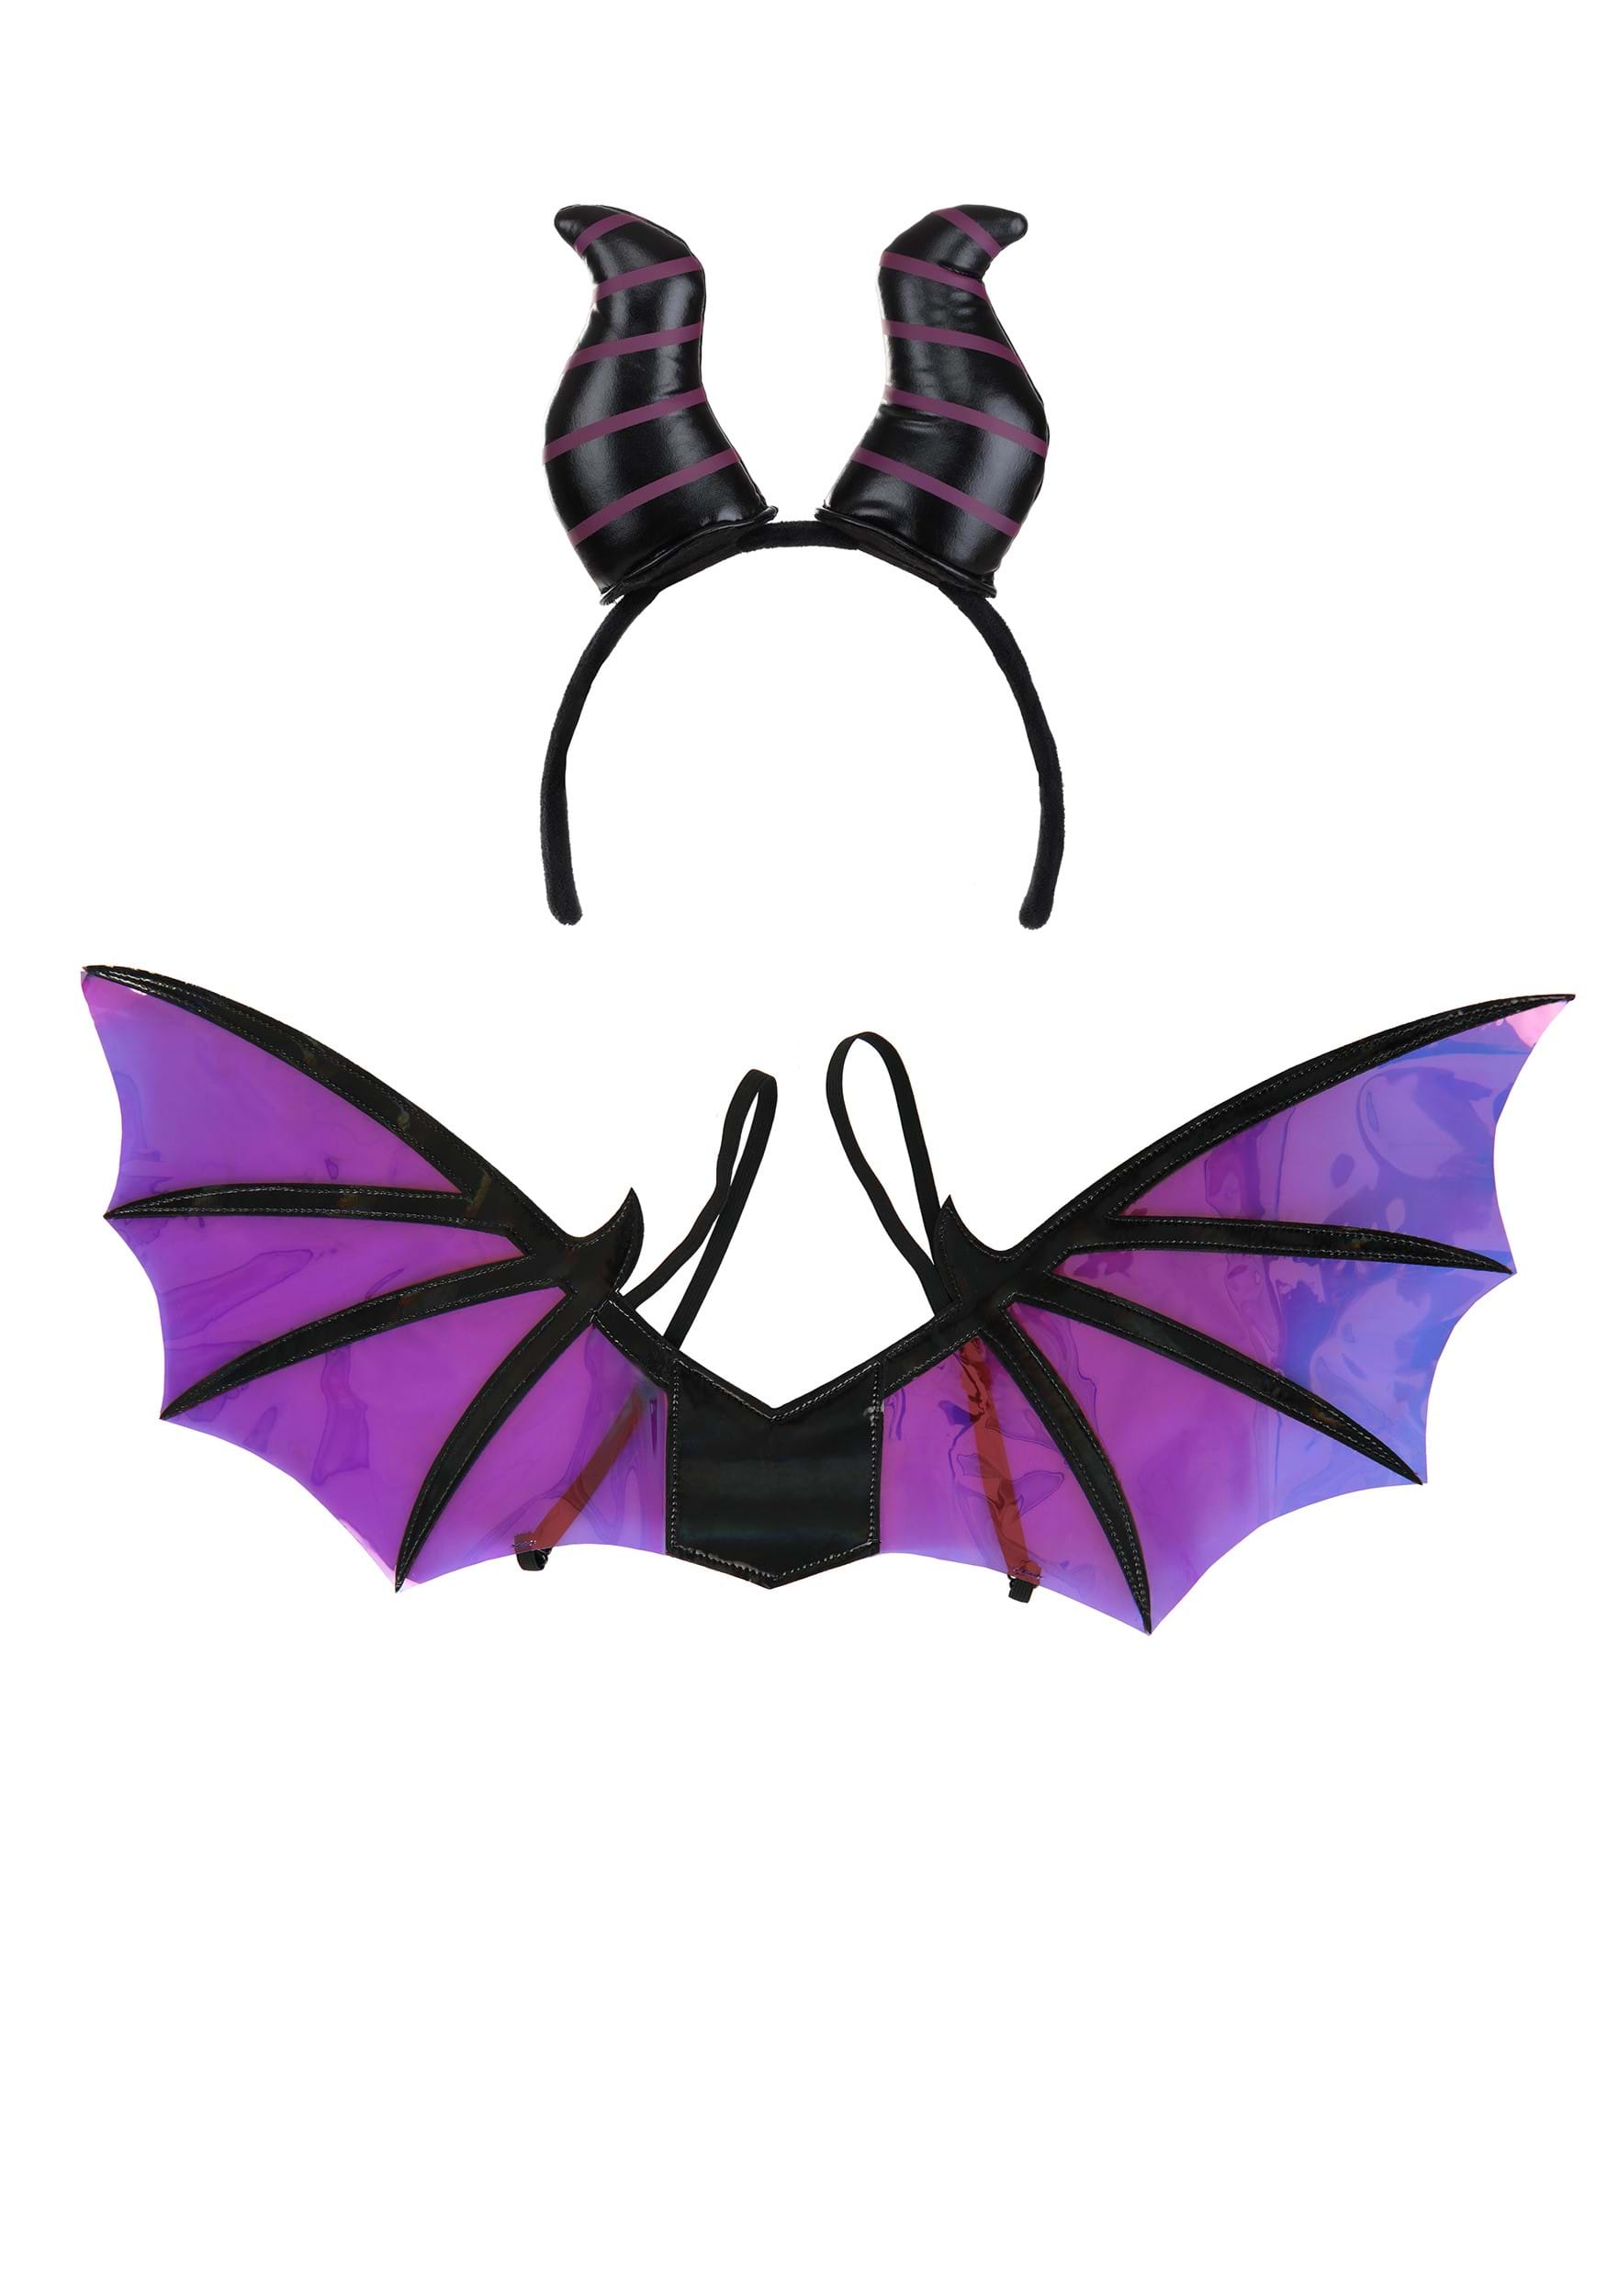 Maleficent Dragon Horns Headband & Wings Kit